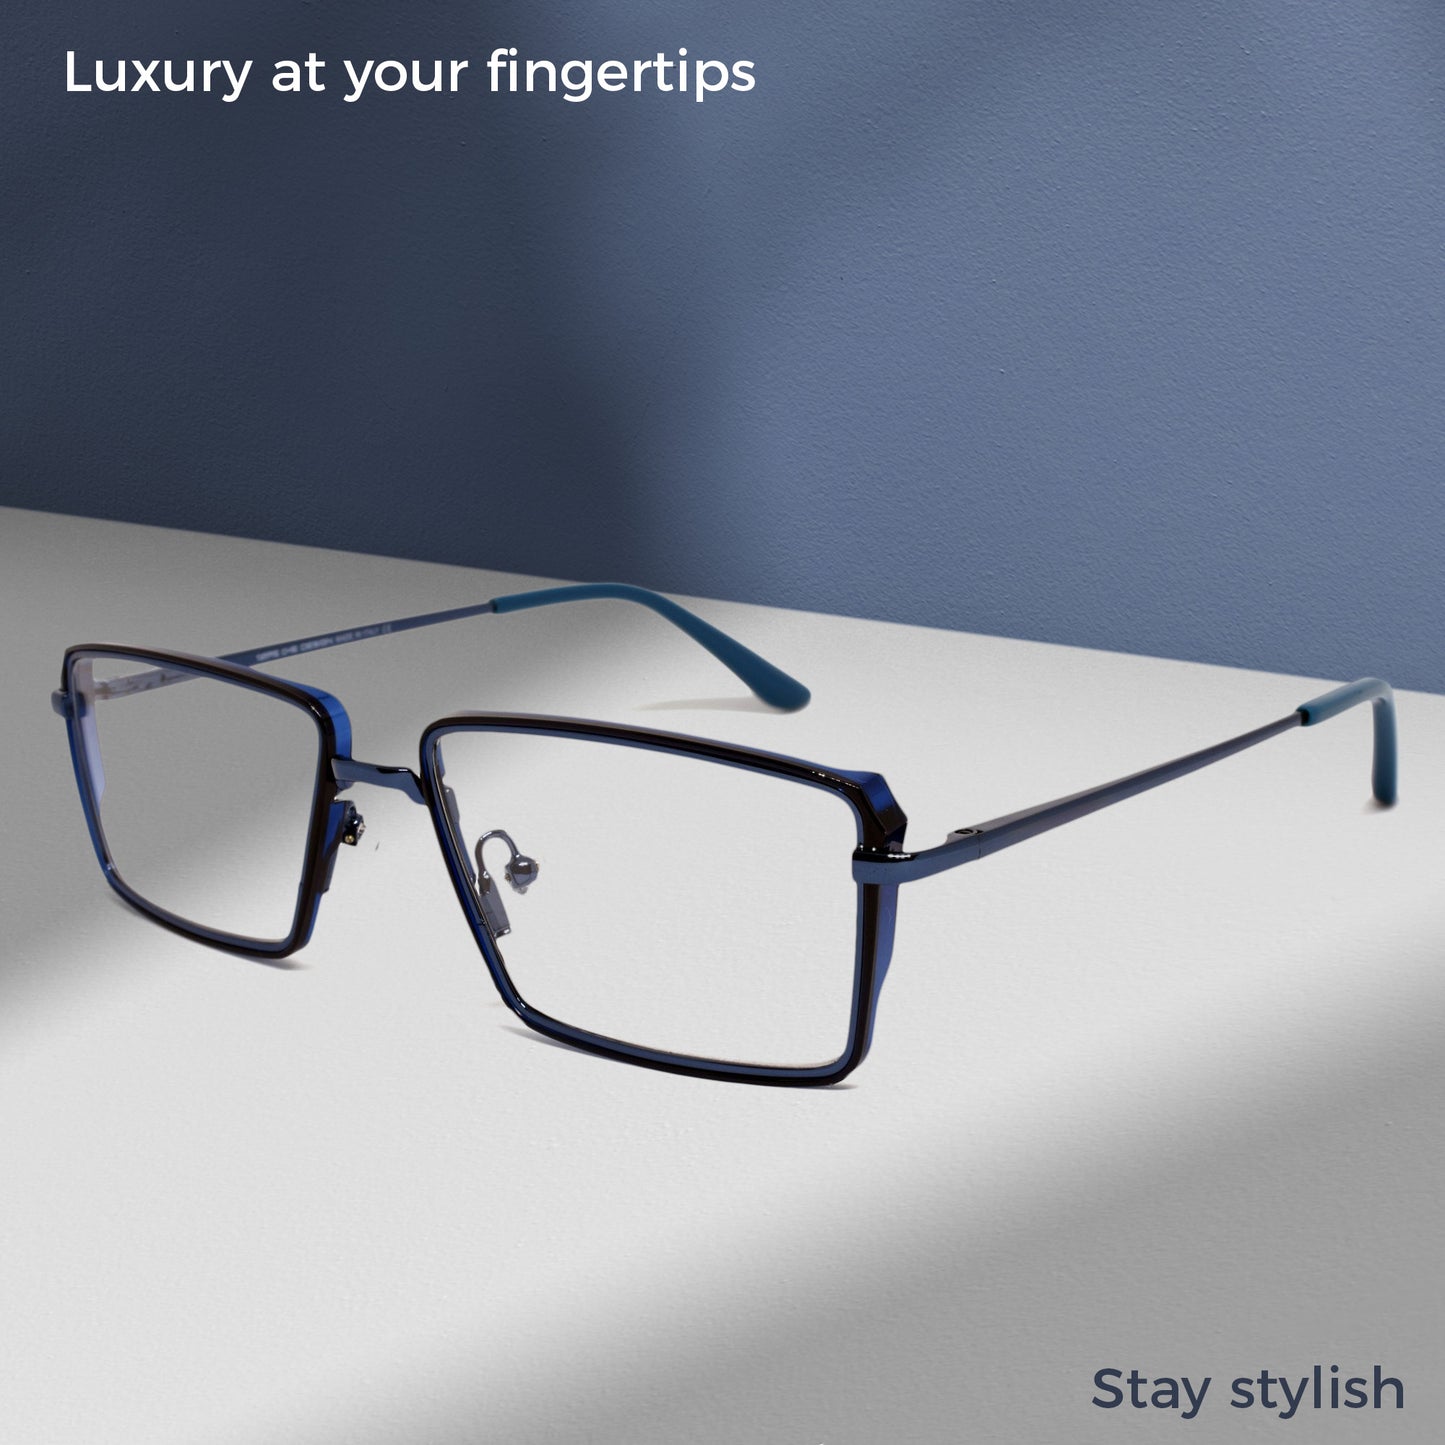 Trendy Stylish Optic Frame | PRS Frame 01 | Premium Quality Eye Glass